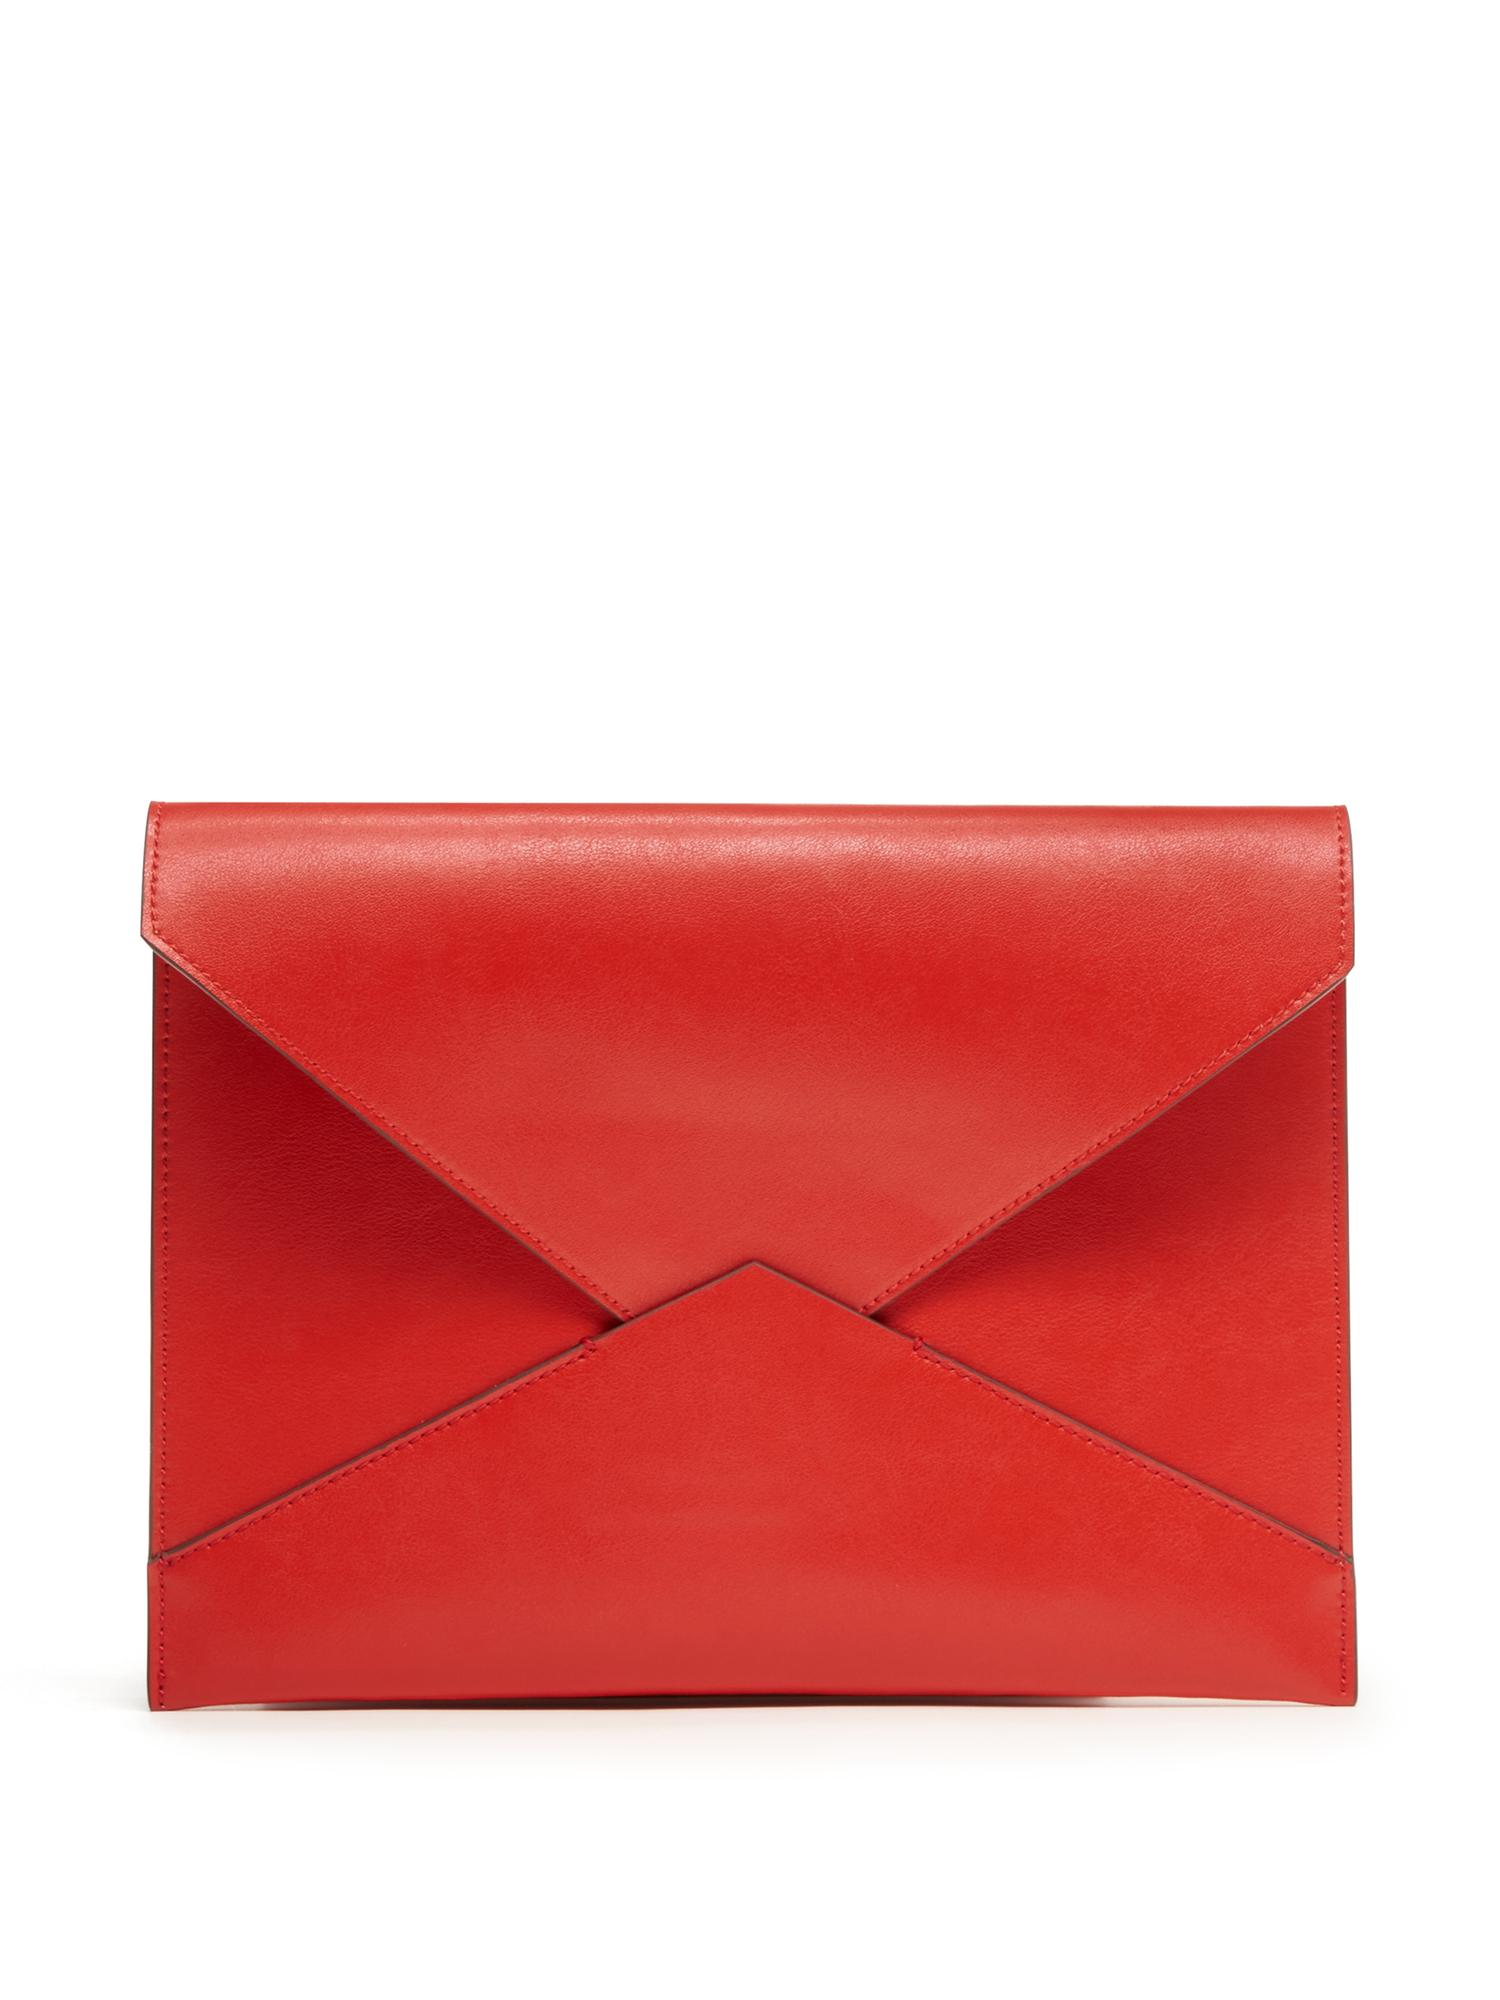 Red Envelope Clutch